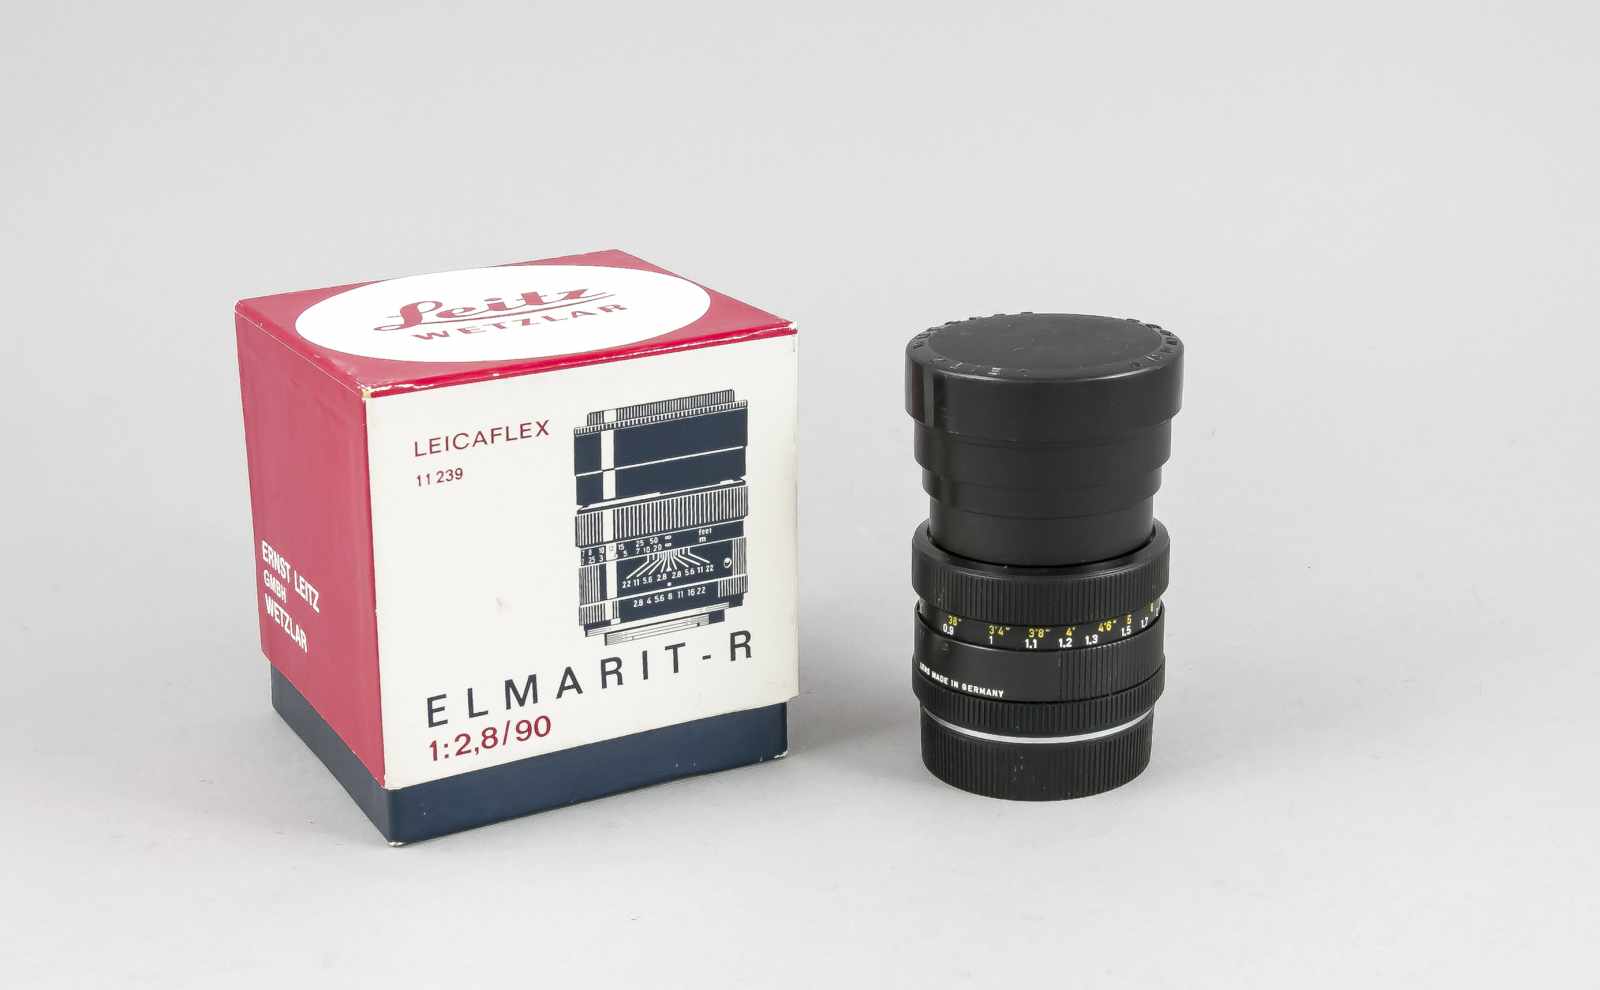 Objektiv Elmarit-R für Leica R, 1:2,8/90, in Original-Karton, 12 x 11 x 11 cm